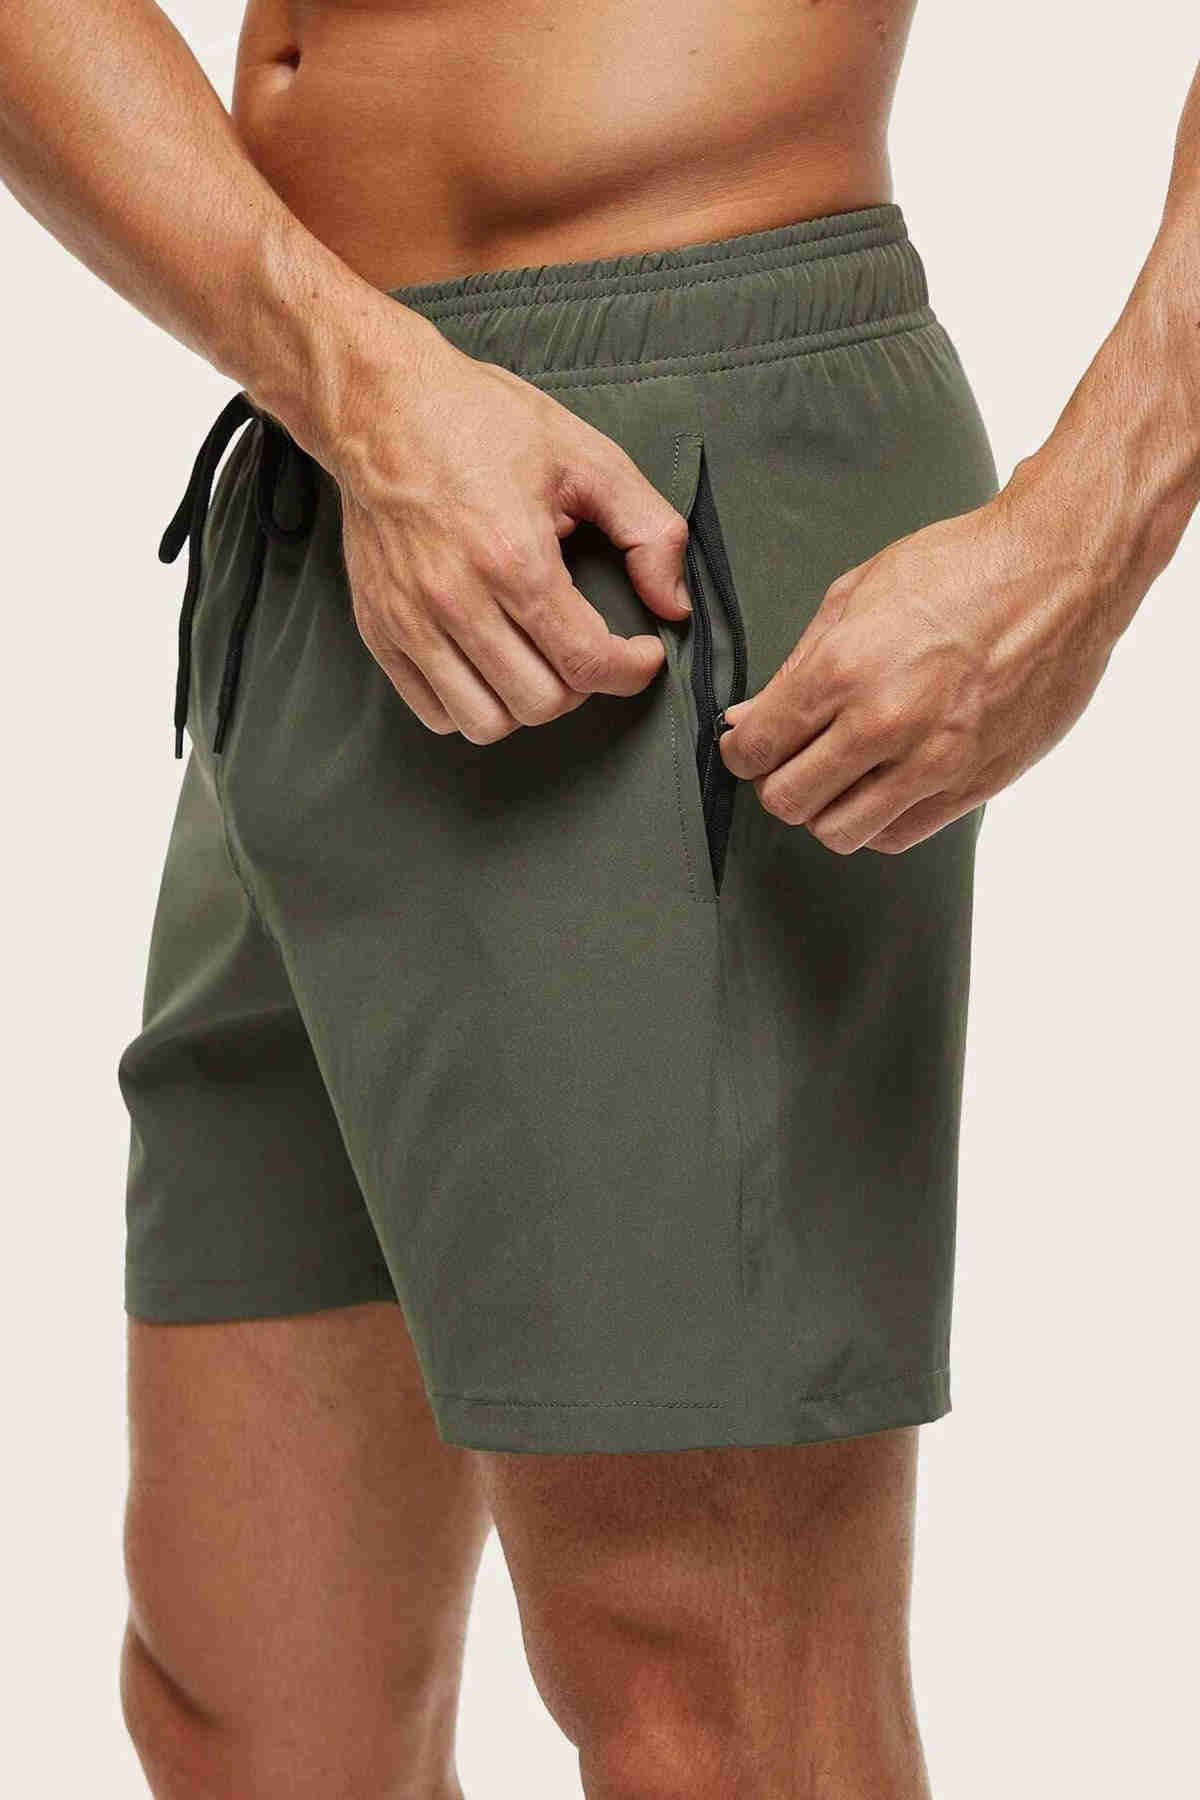 Men's Basic Standard Size Swimwear Zipper Pocket Sea Shorts